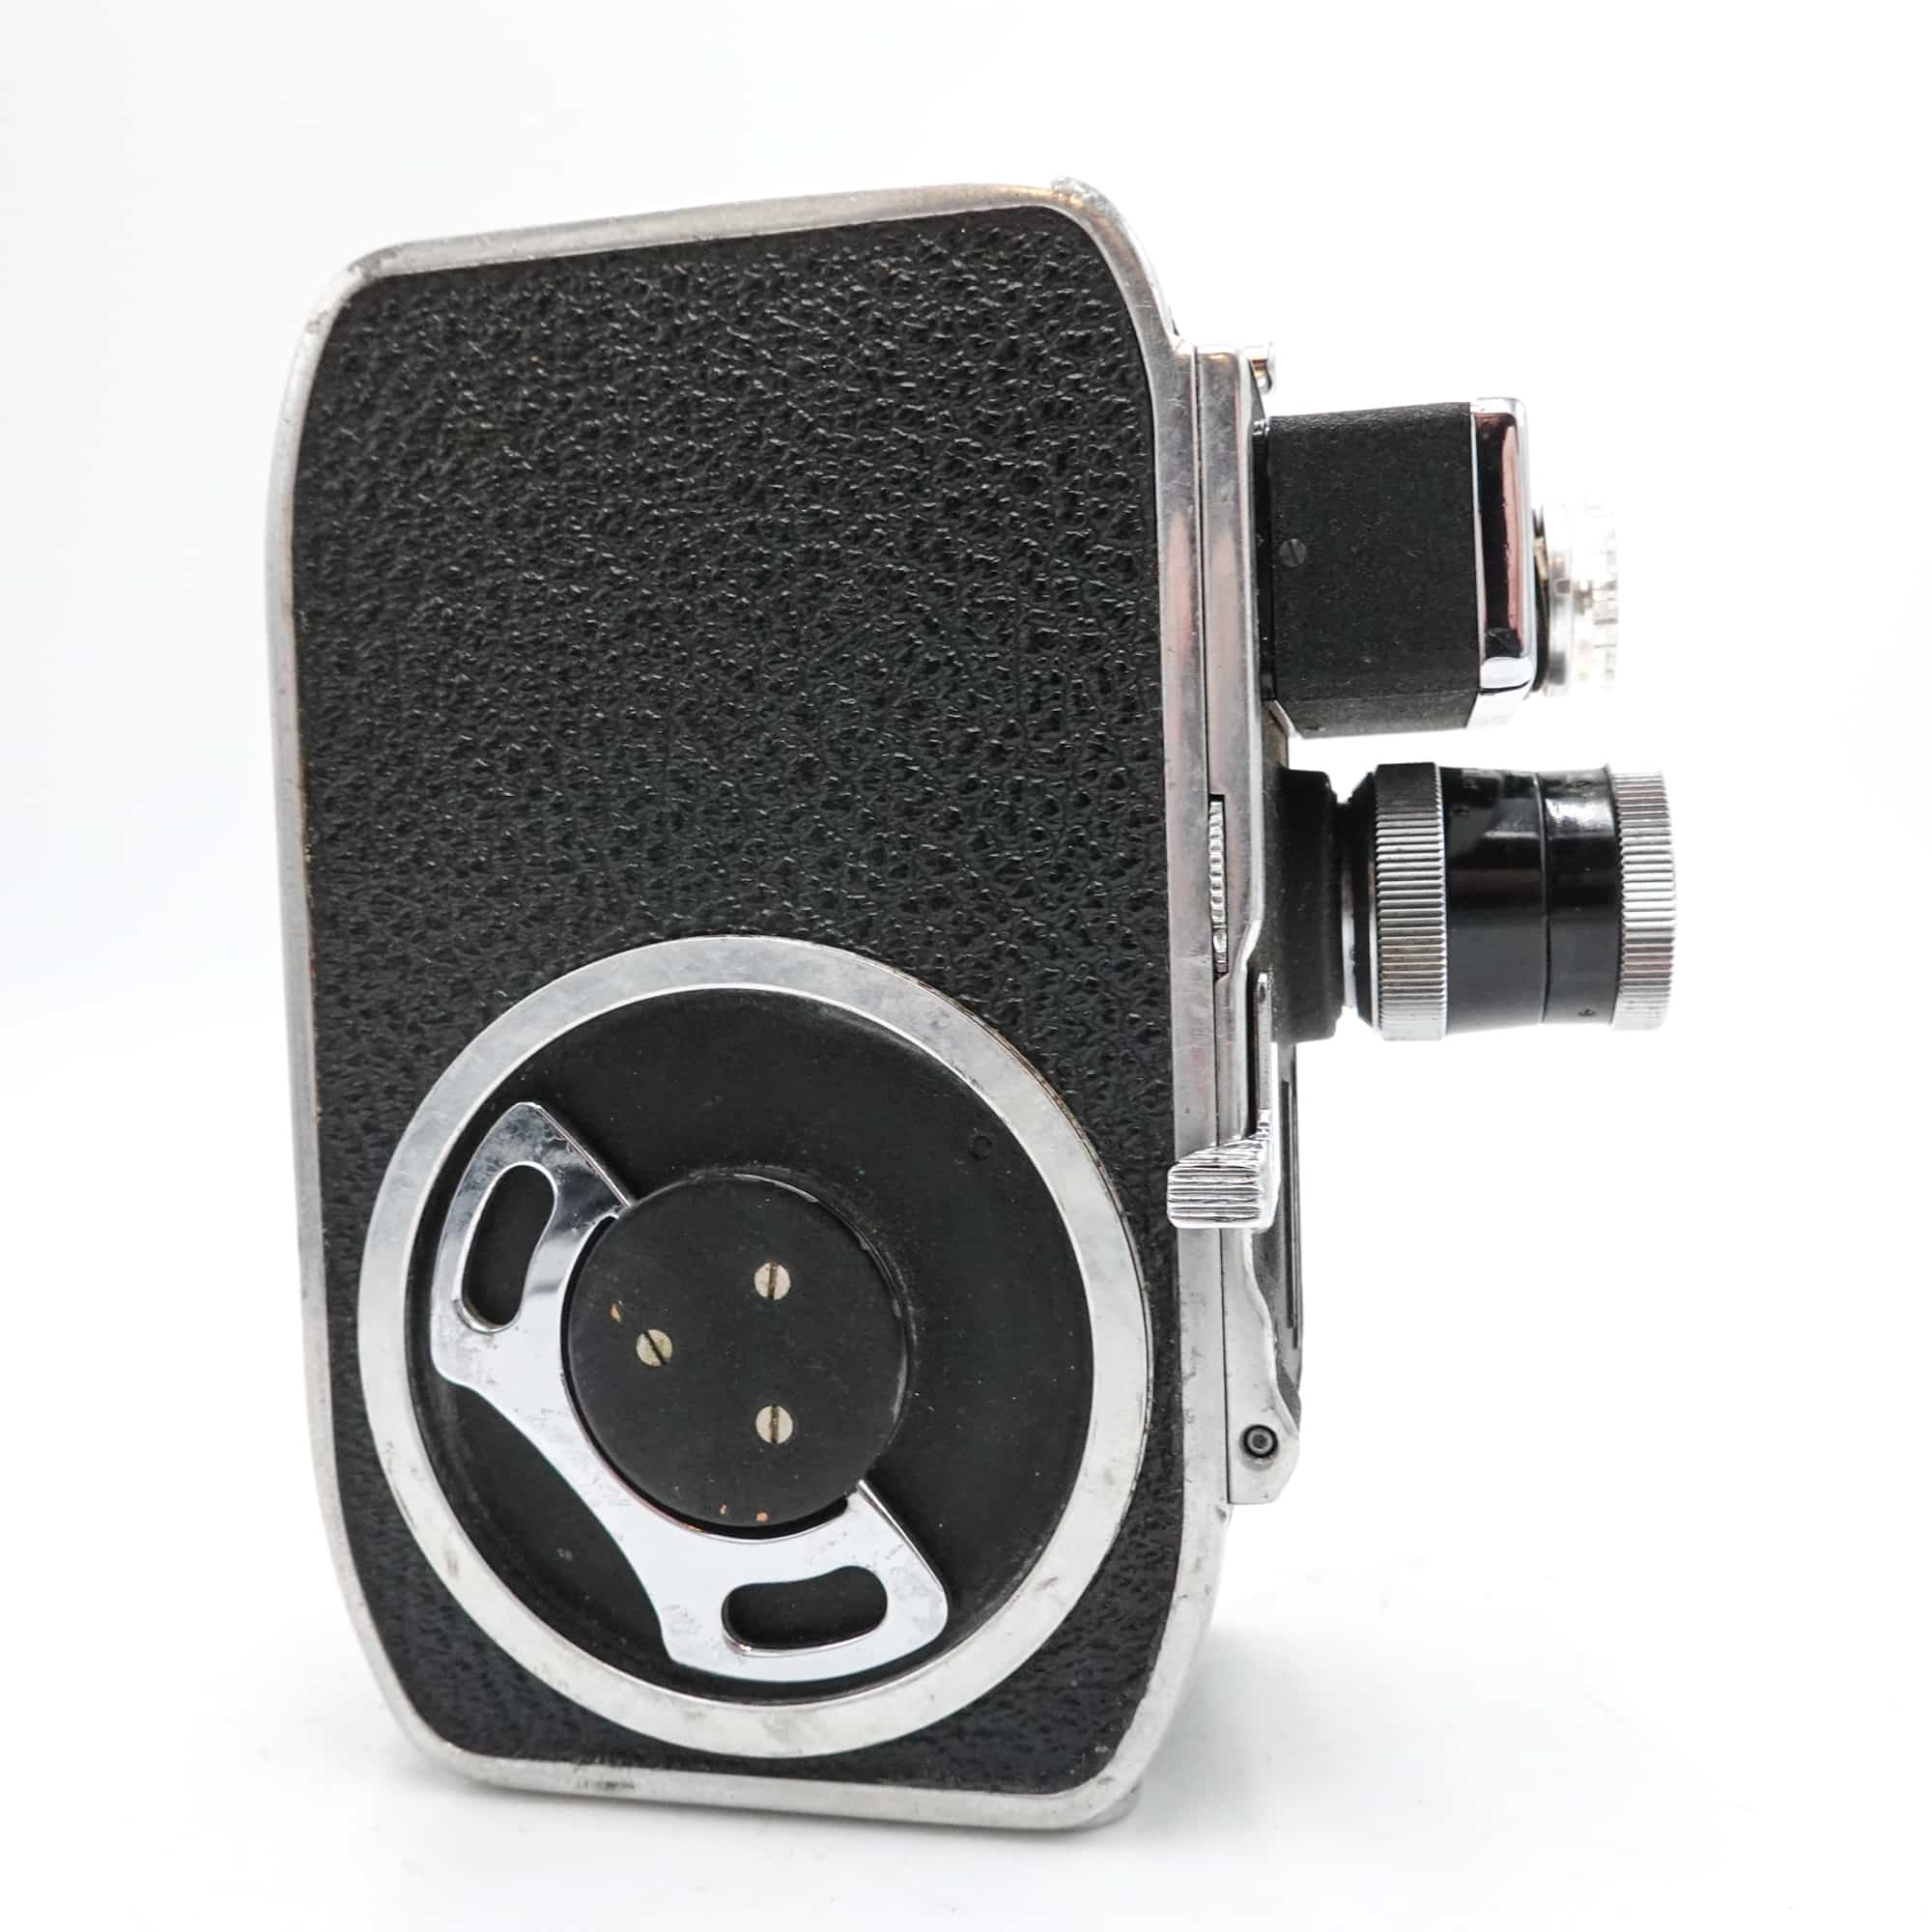 Bolex Paillard C8SL Double 8mm Camera